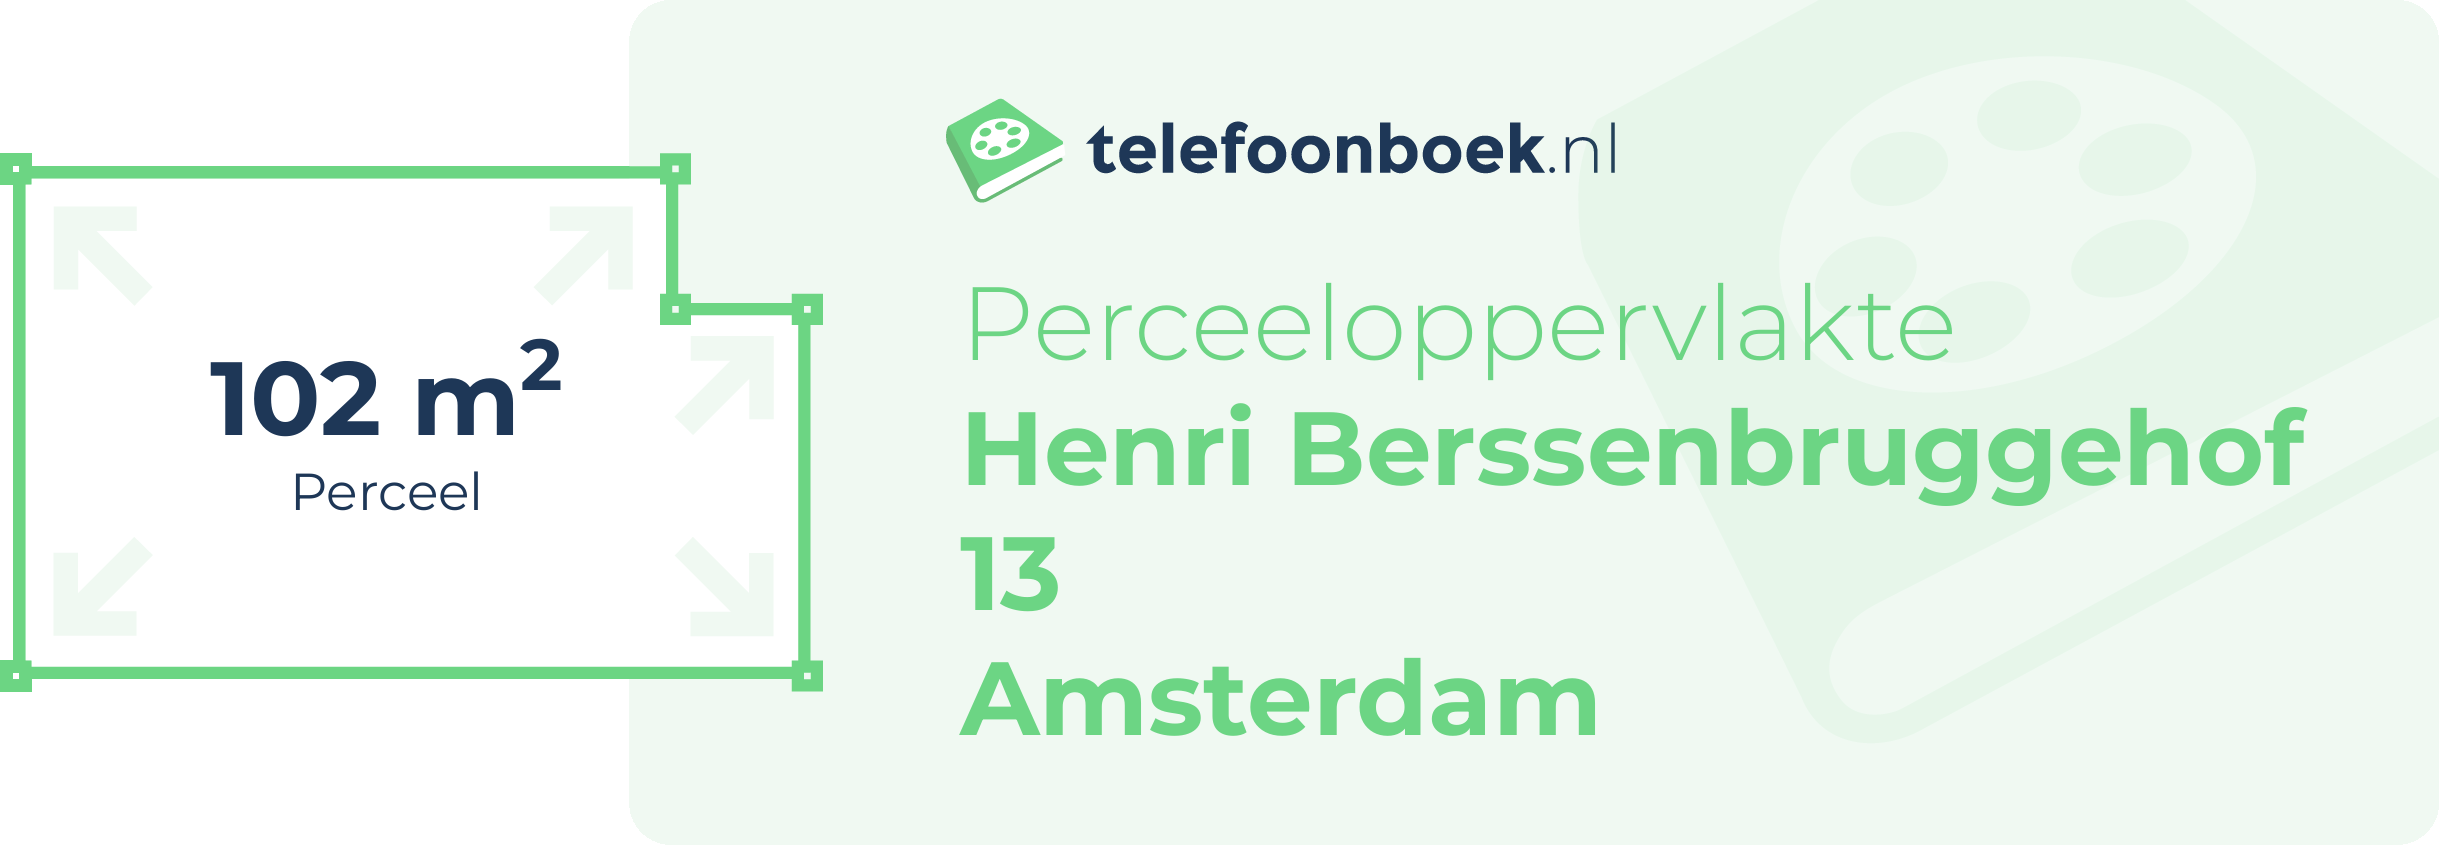 Perceeloppervlakte Henri Berssenbruggehof 13 Amsterdam